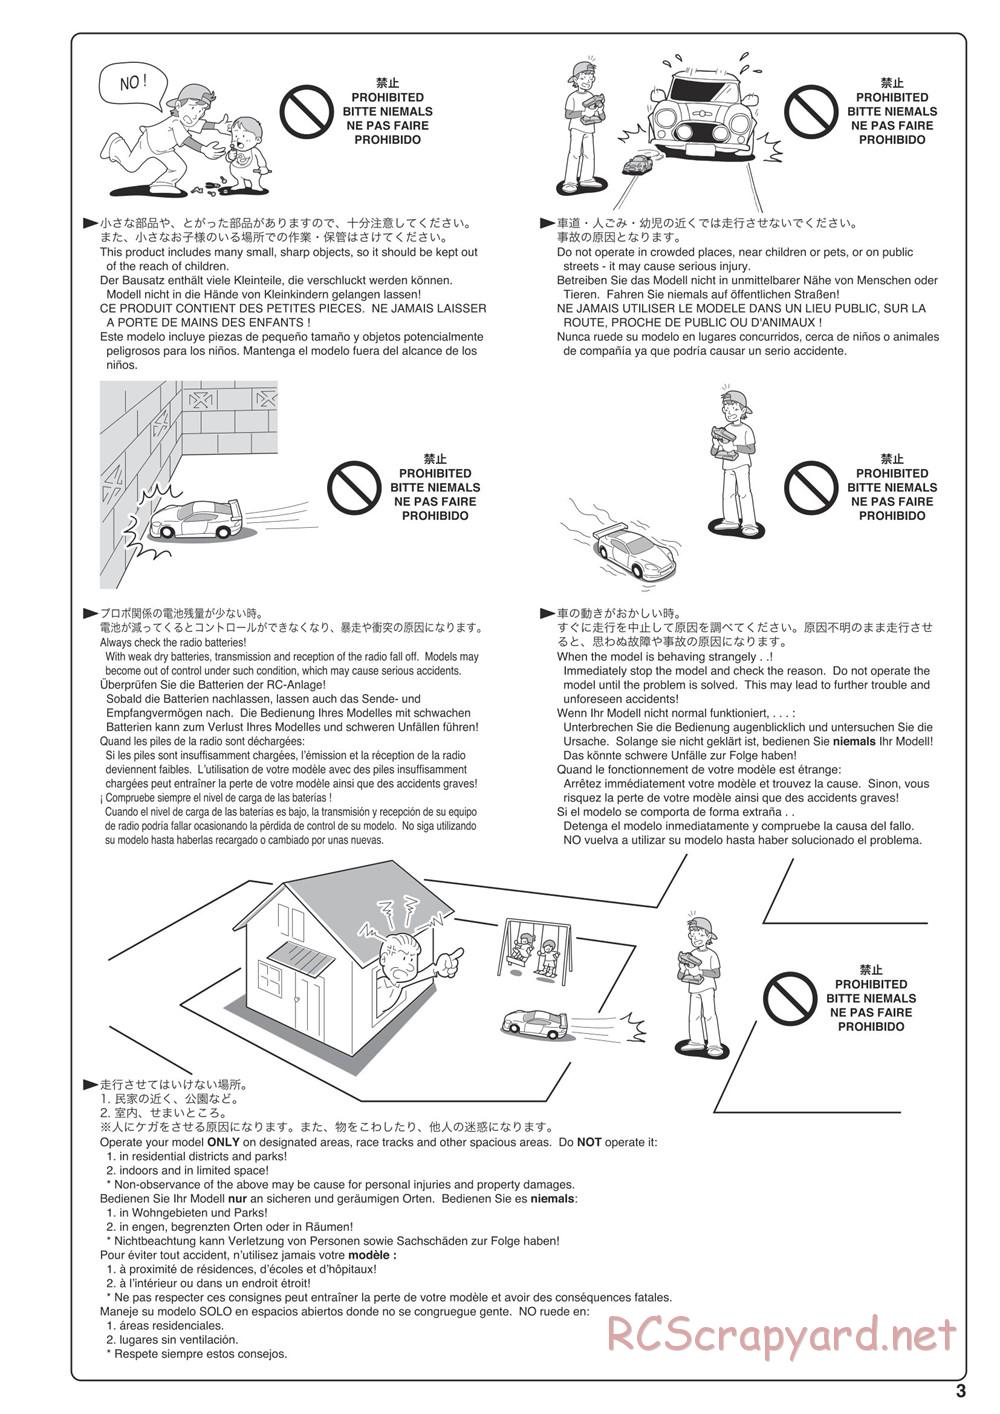 Kyosho - Nitro Tracker (2019) - Manual - Page 3